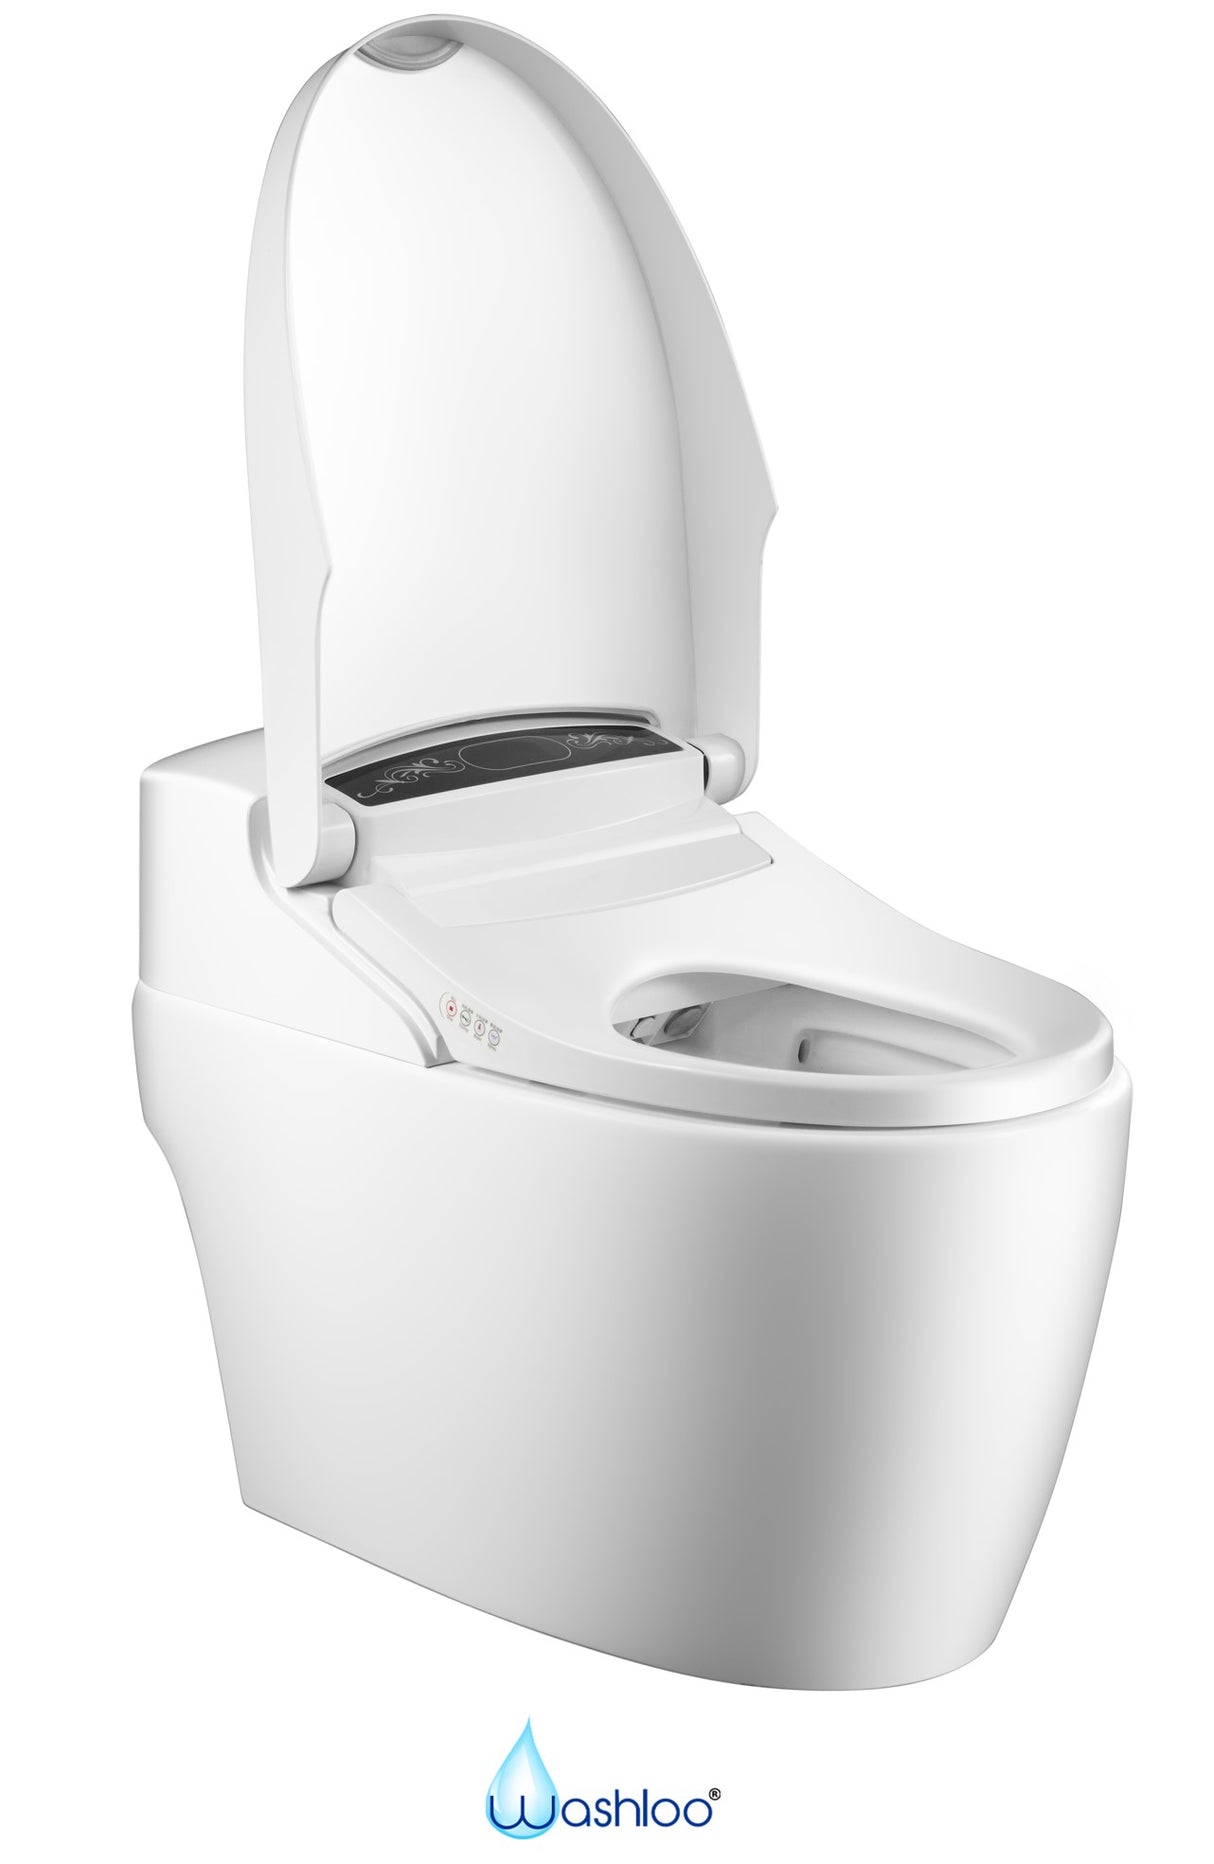 Washloo Evolution Smart Toilet - NEW MODEL!!